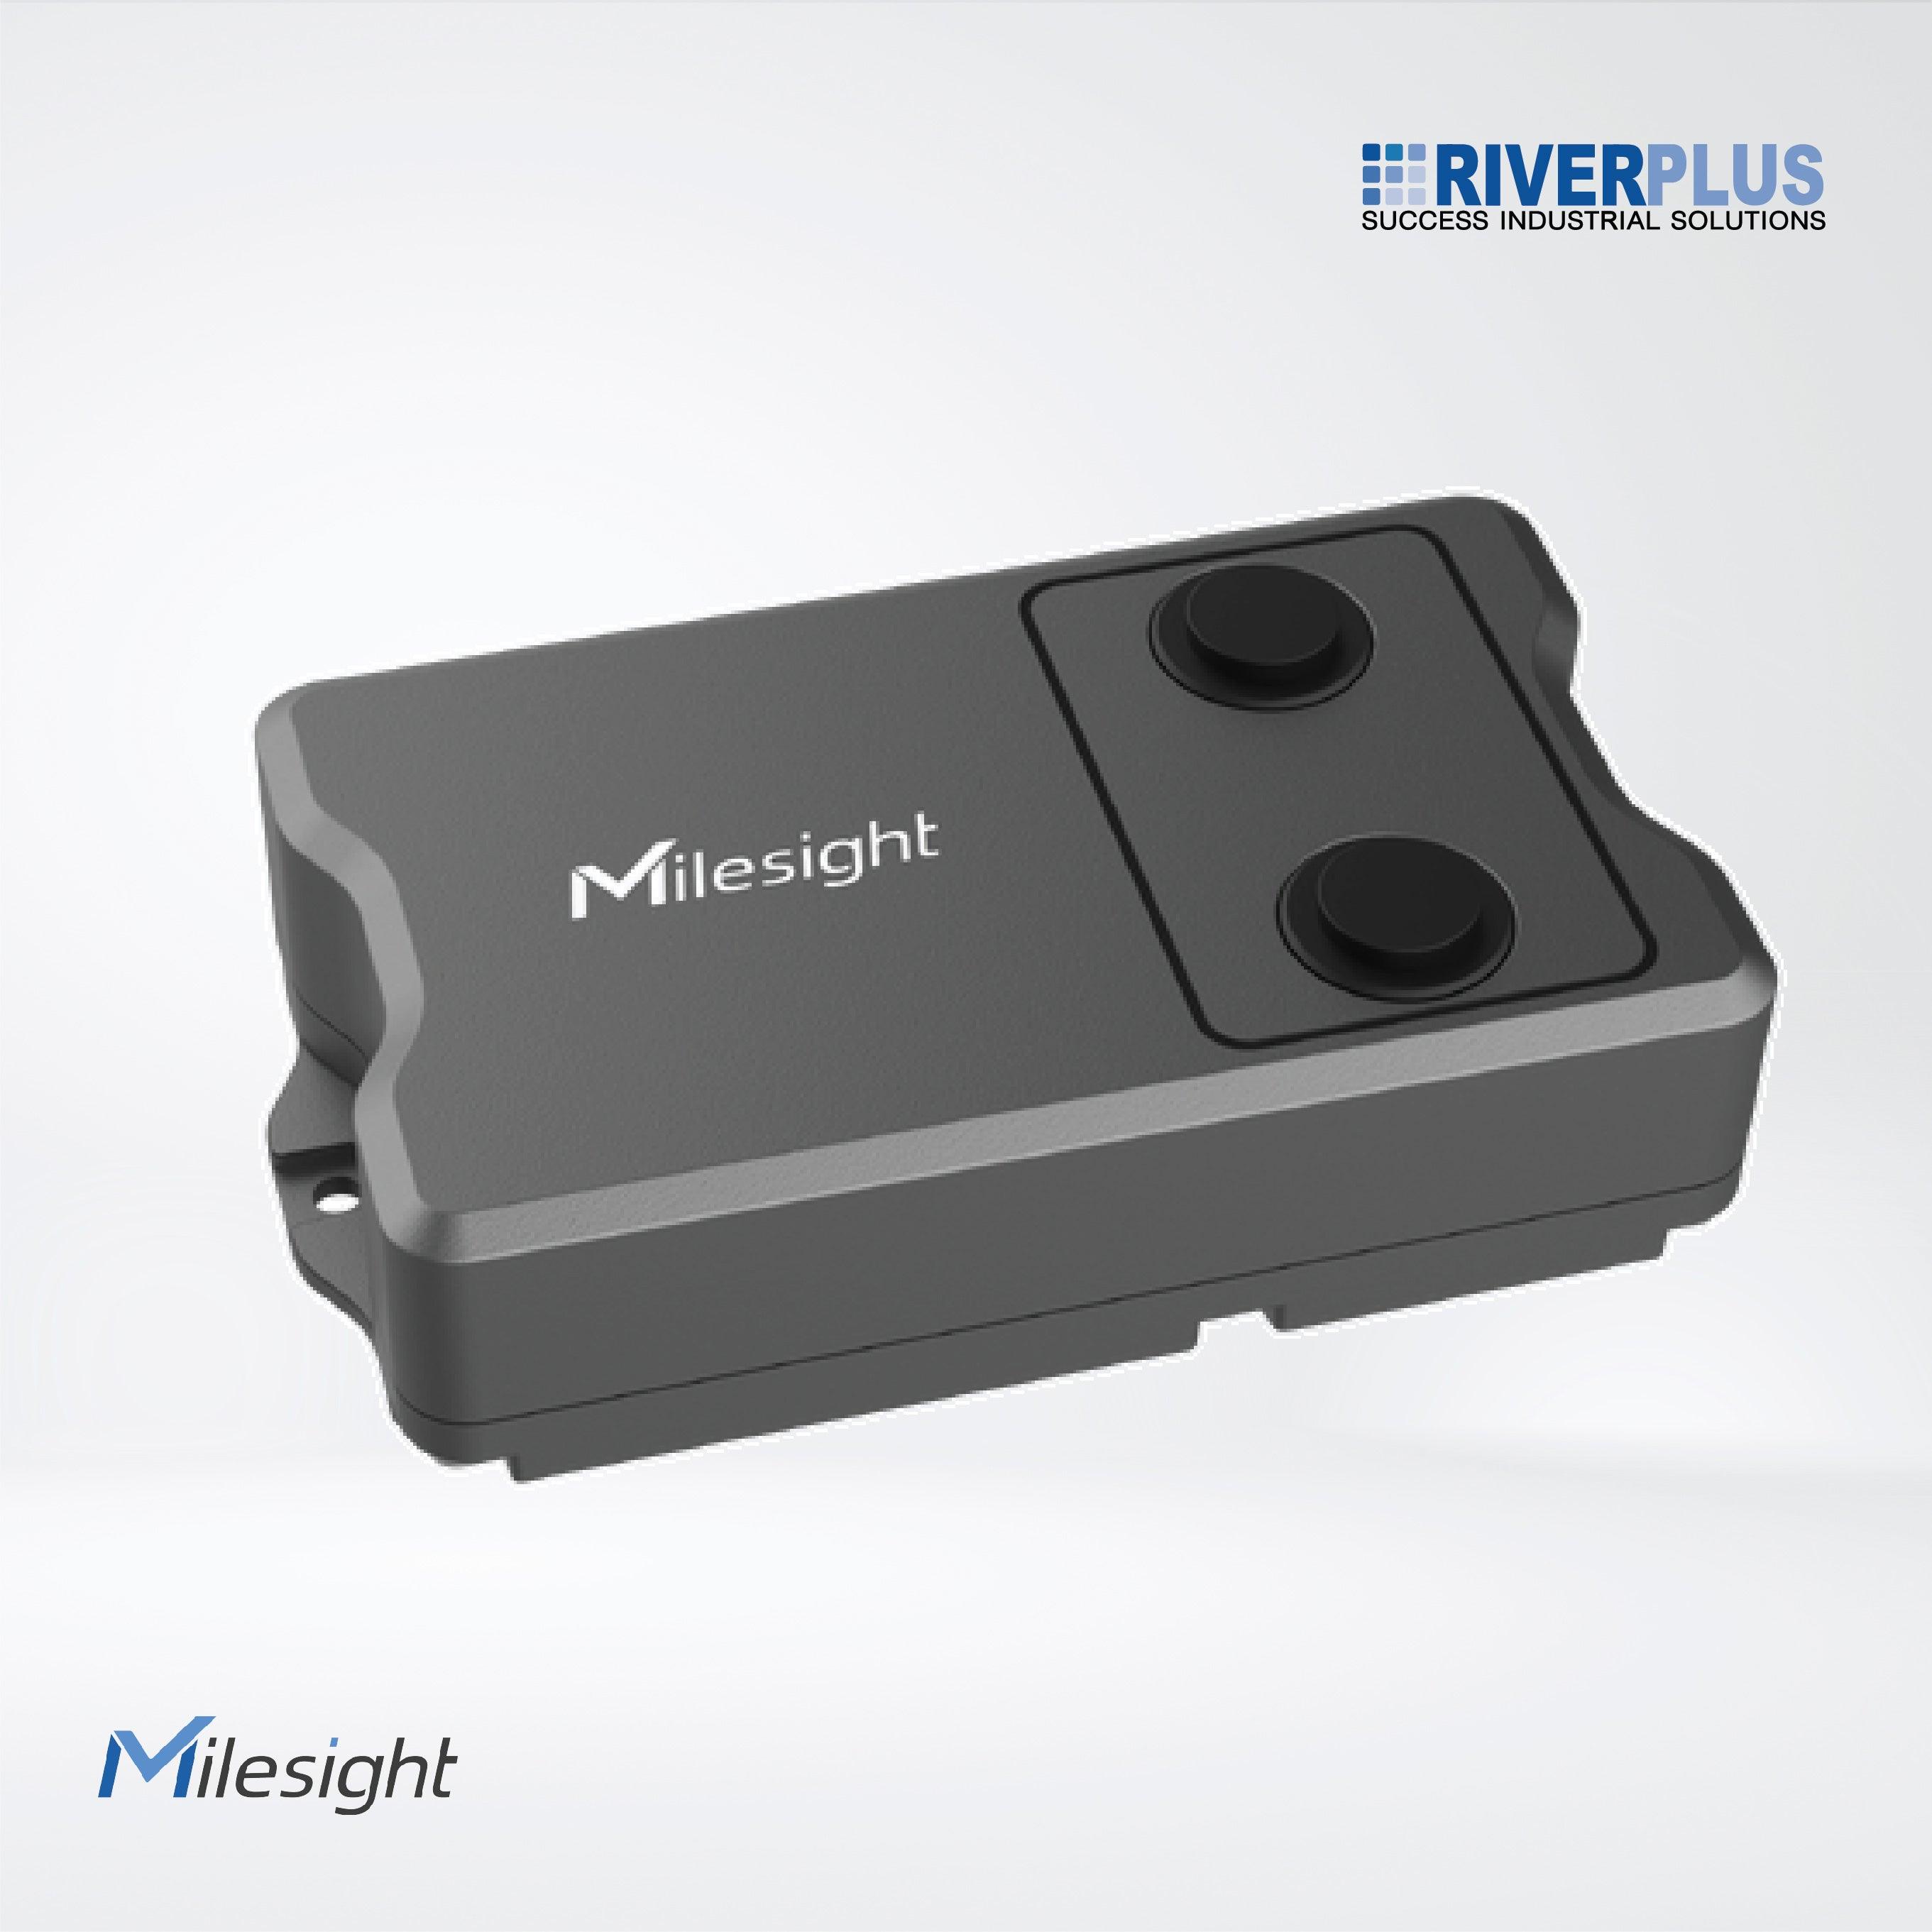 EM400-MUD Multifunctional Ultrasonic Distance Sensor - Riverplus